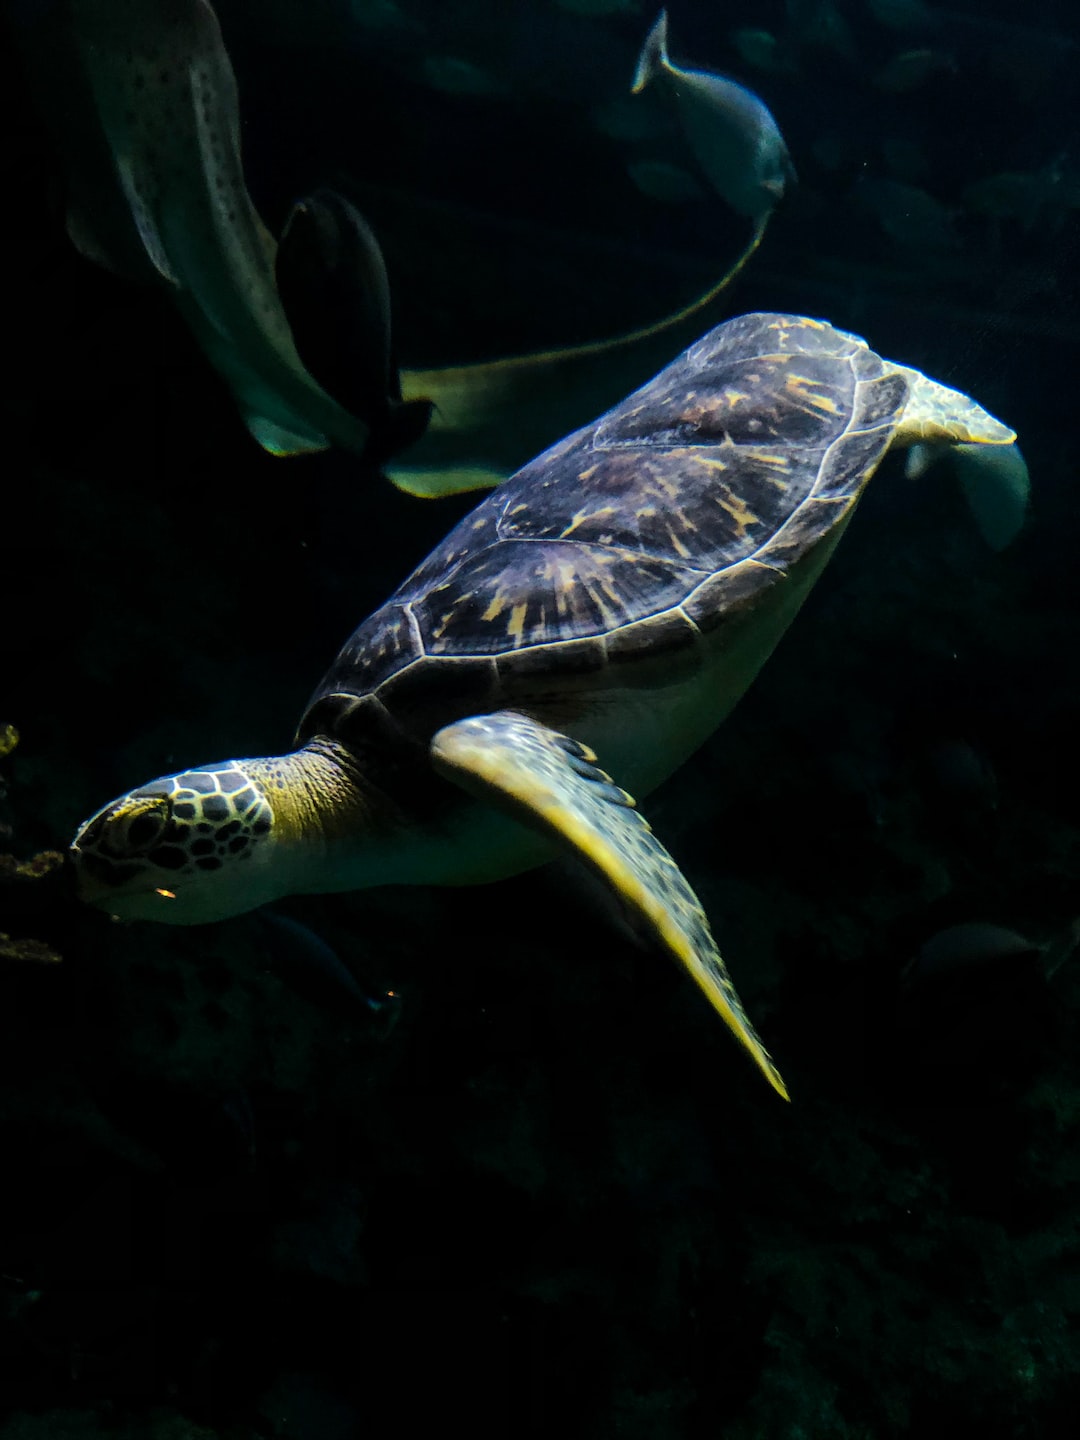 17 wichtige Fragen zu How Do You Make A Slope For An Aquarium?